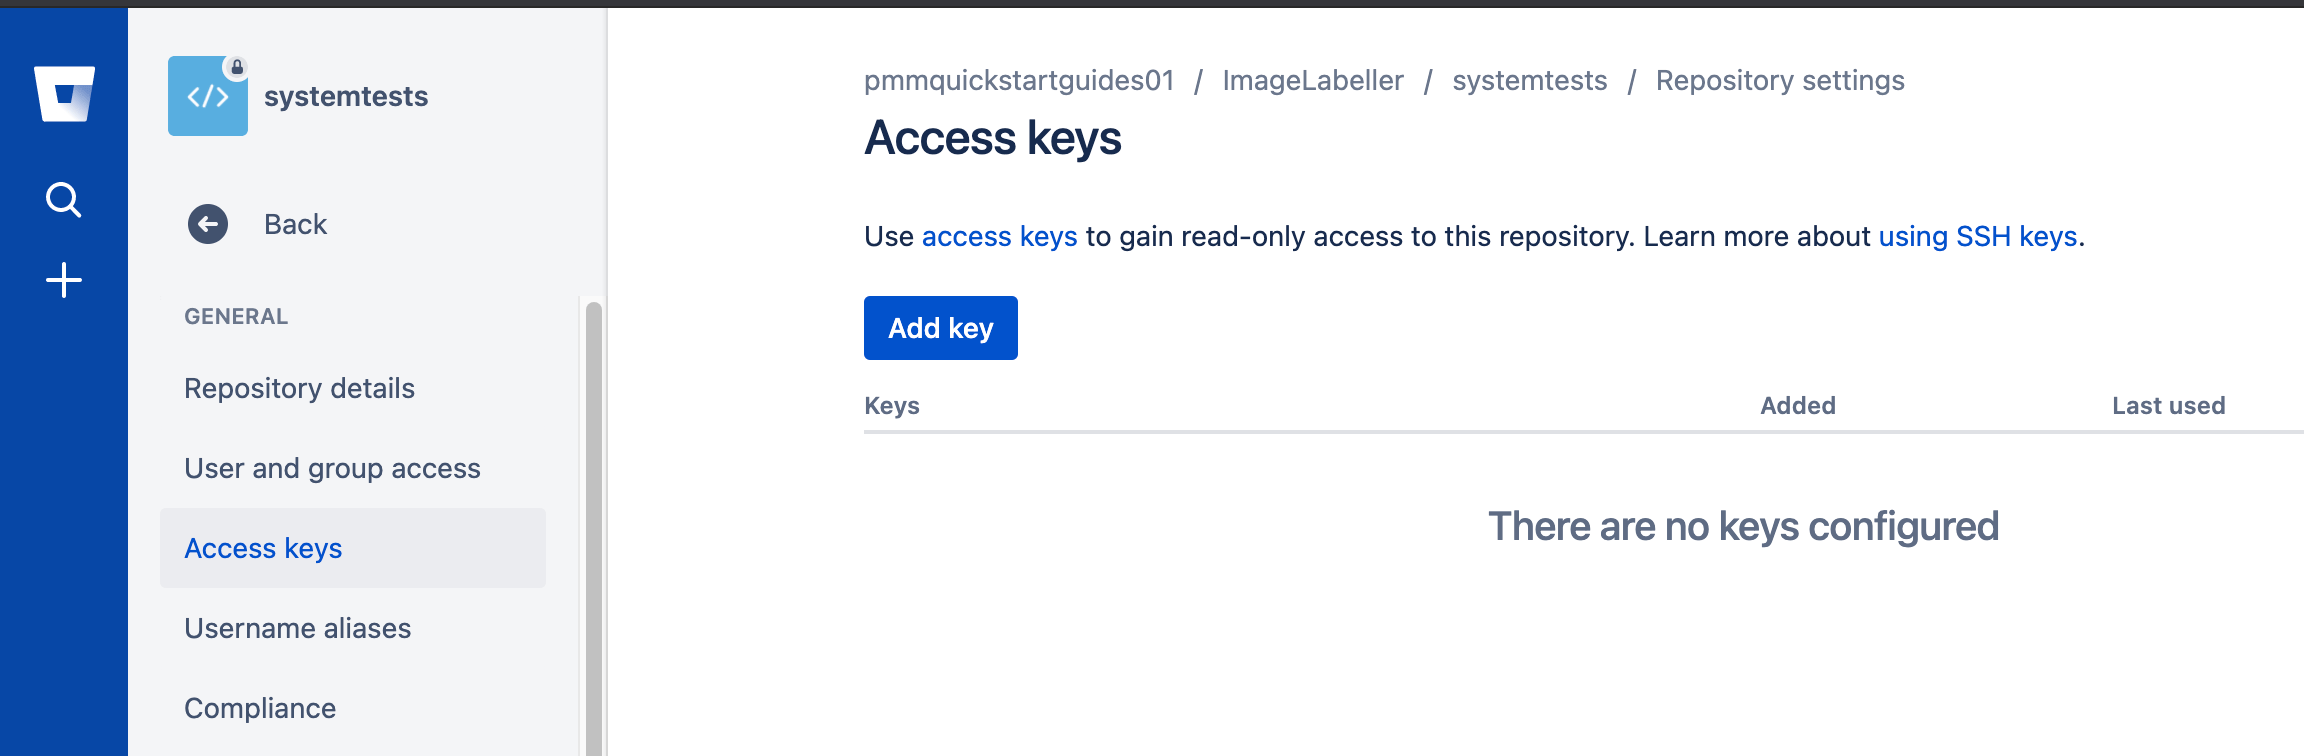 Access keys settings page in Bitbucket